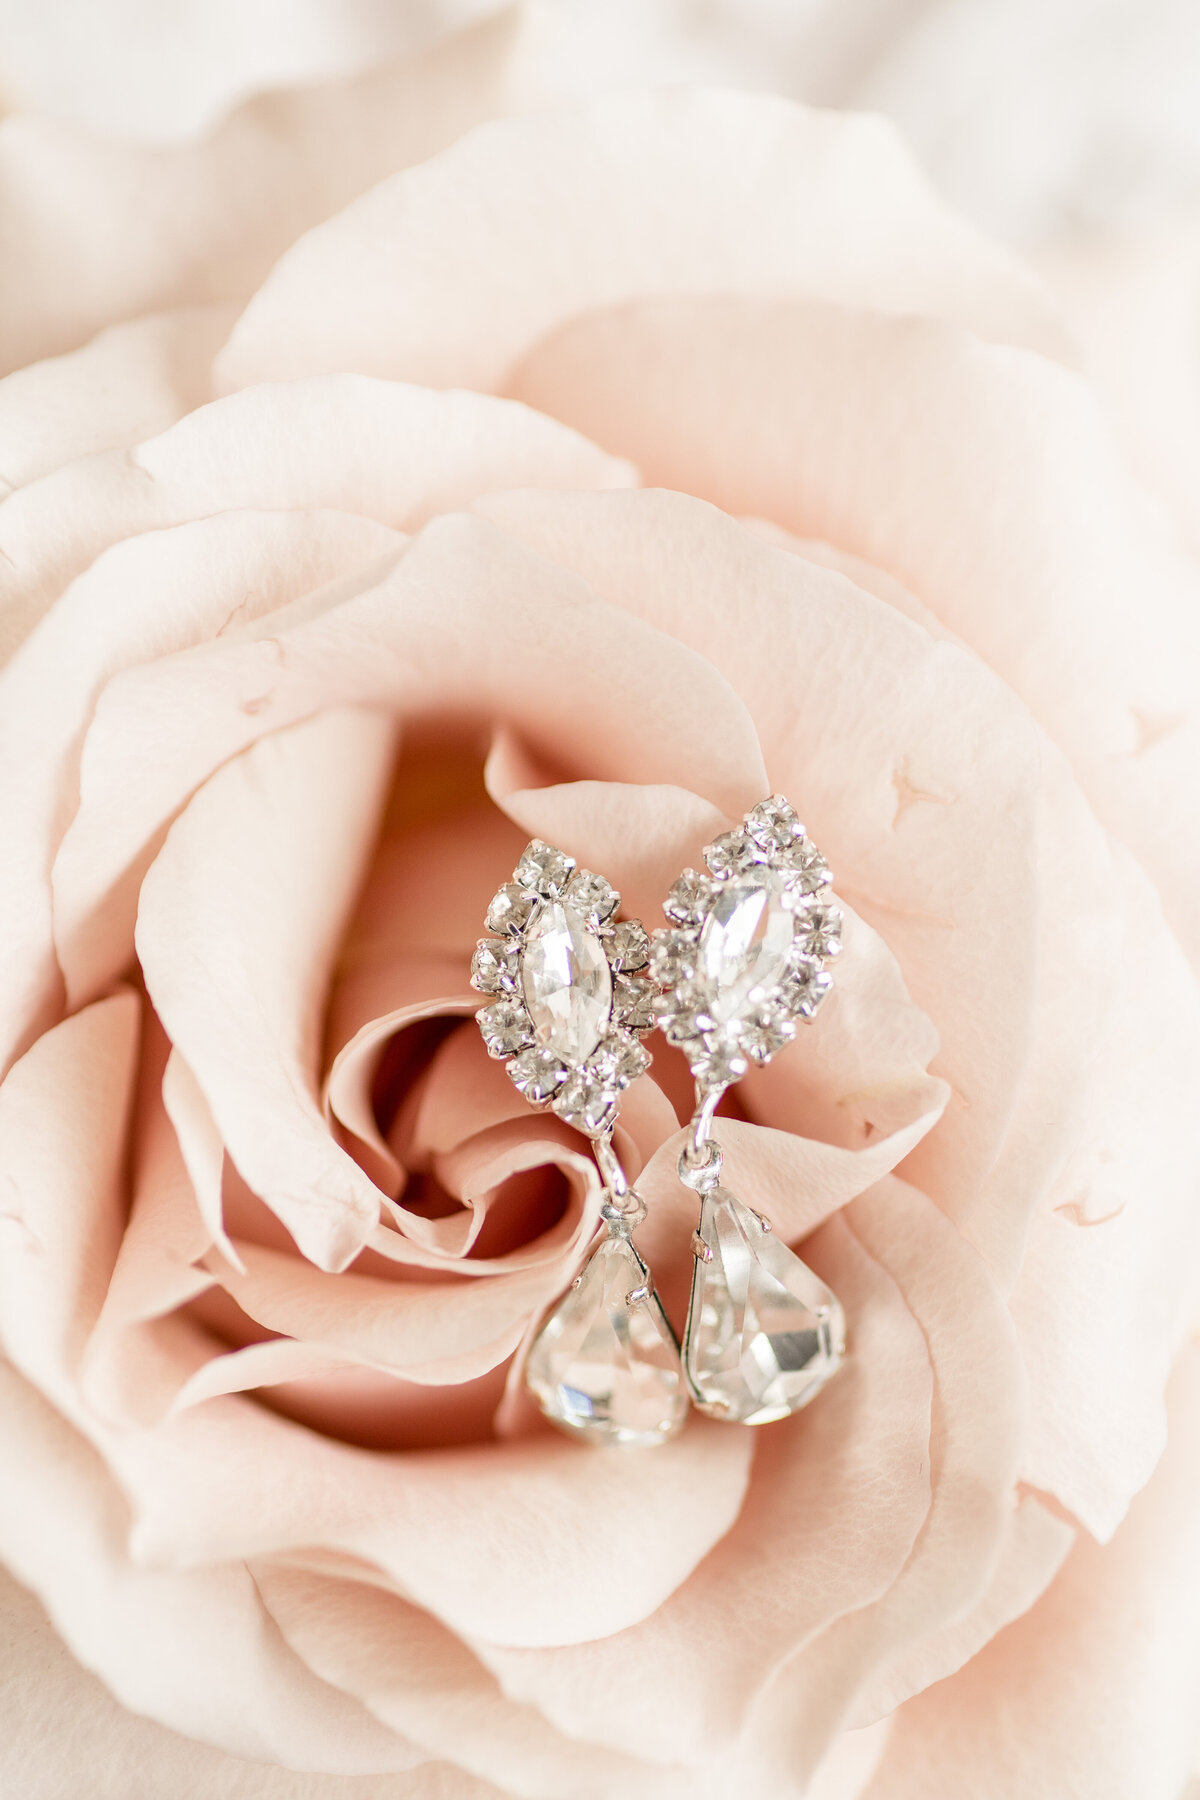 Beautiful dangly diamond earrings resting inside pale pink rose bud.